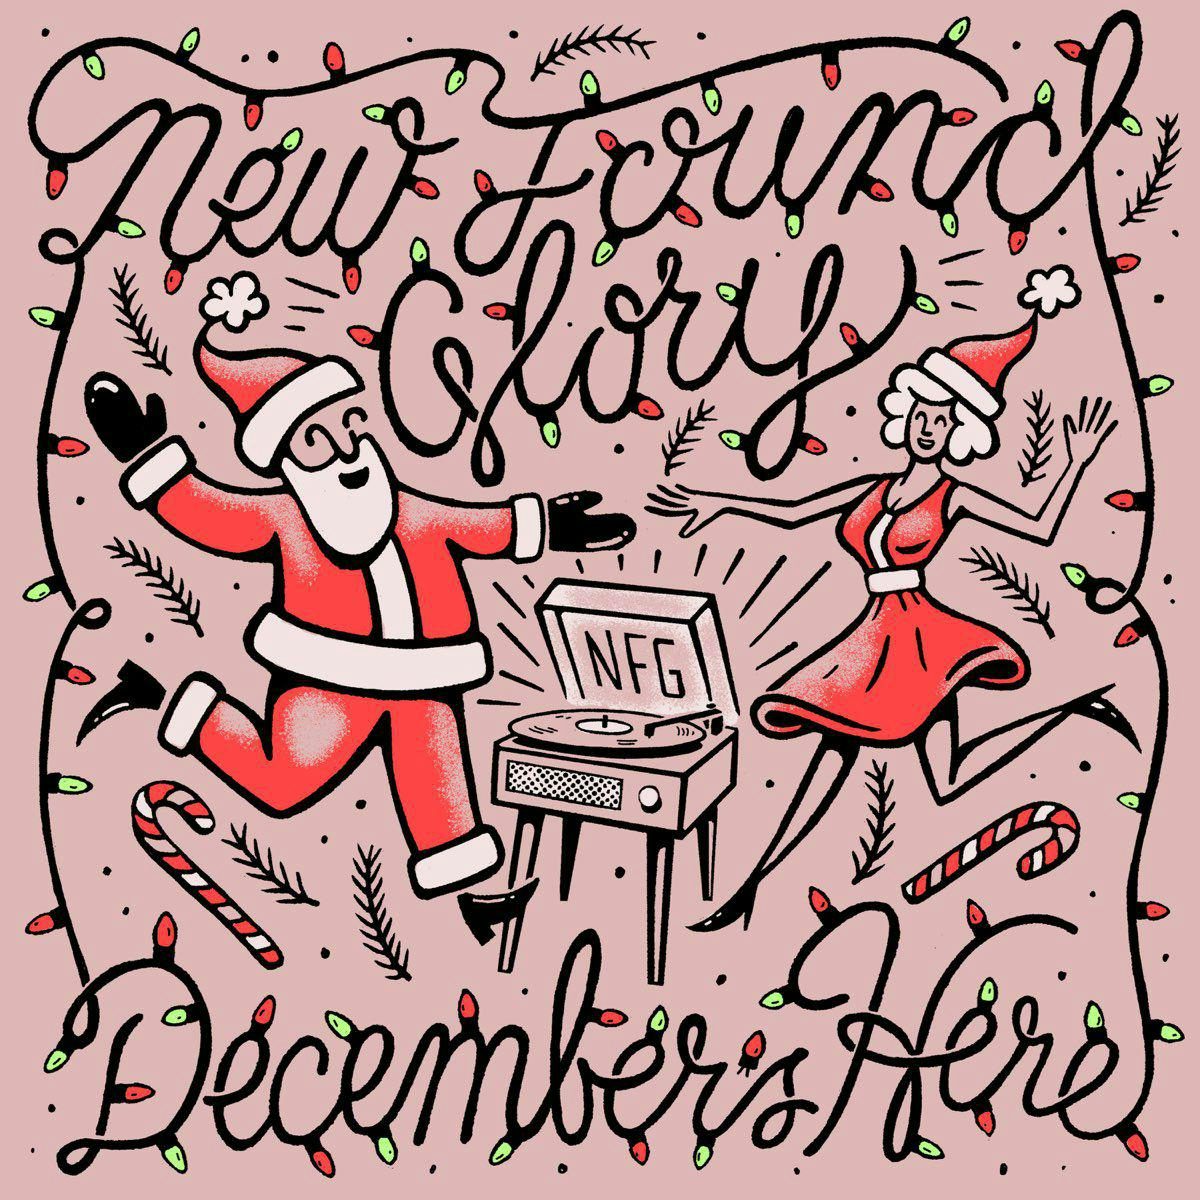 New Found Glory December's Here - Light Pink Vinyl Record $24.99$22.49